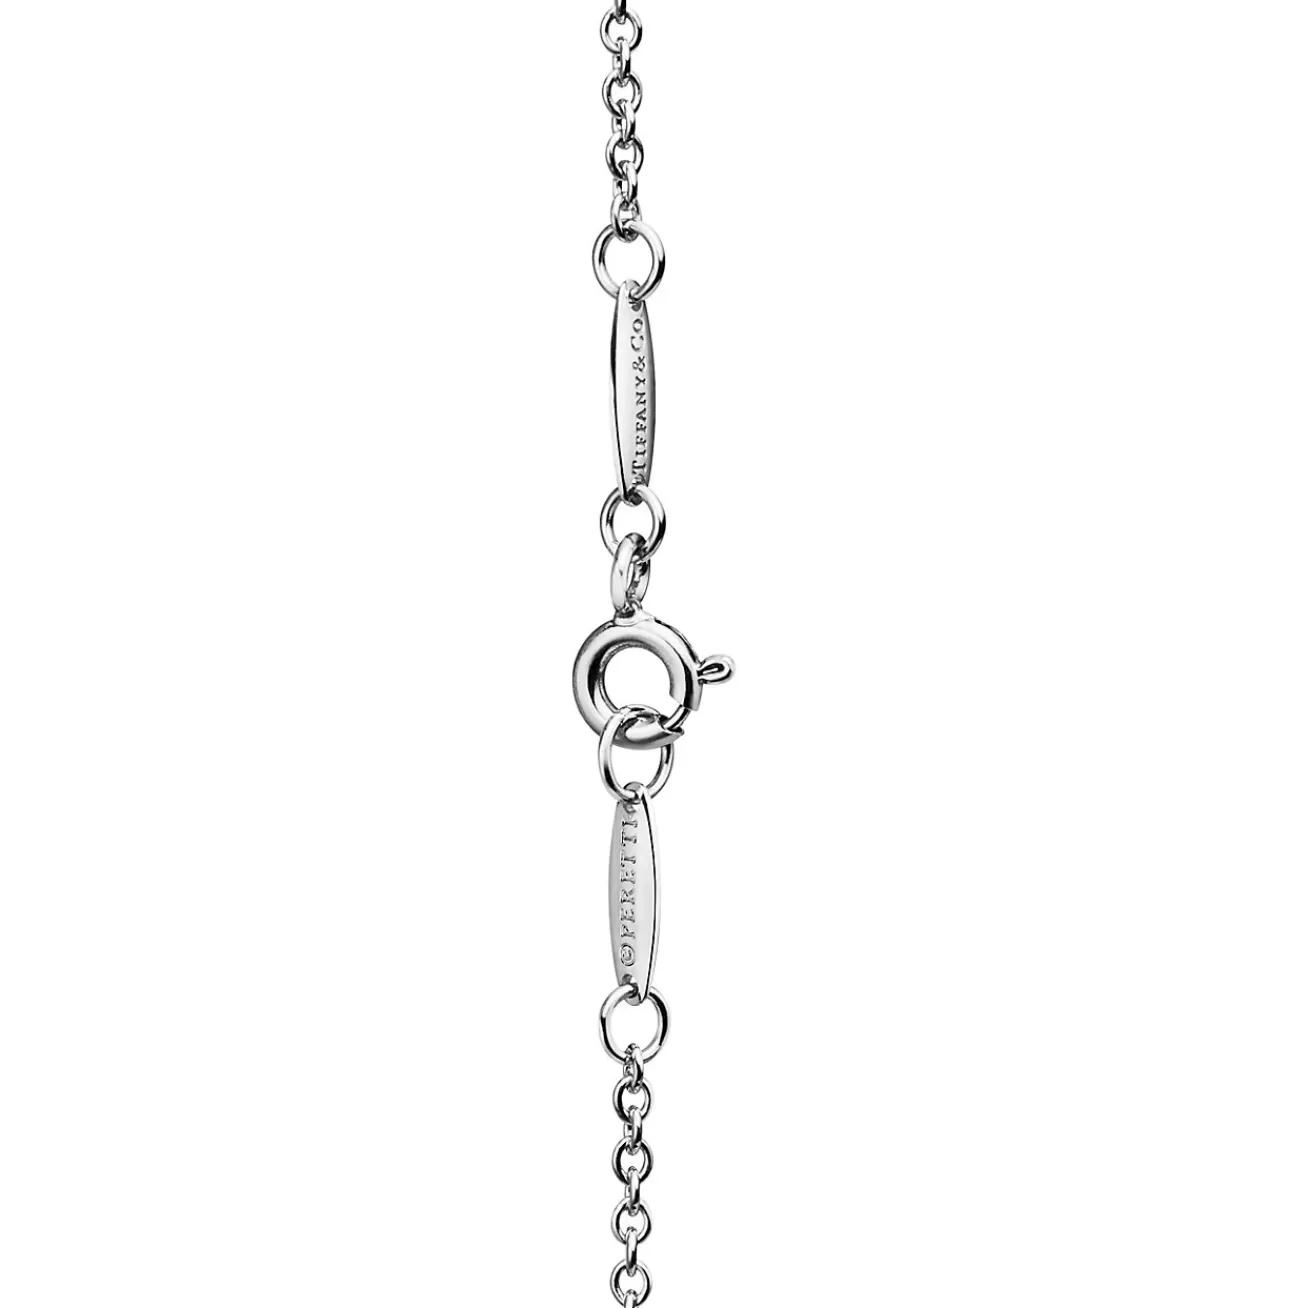 Tiffany & Co. Elsa Peretti® Bean® design Bracelet in Sterling Silver, 9 mm | ^ Bracelets | Gifts for Her